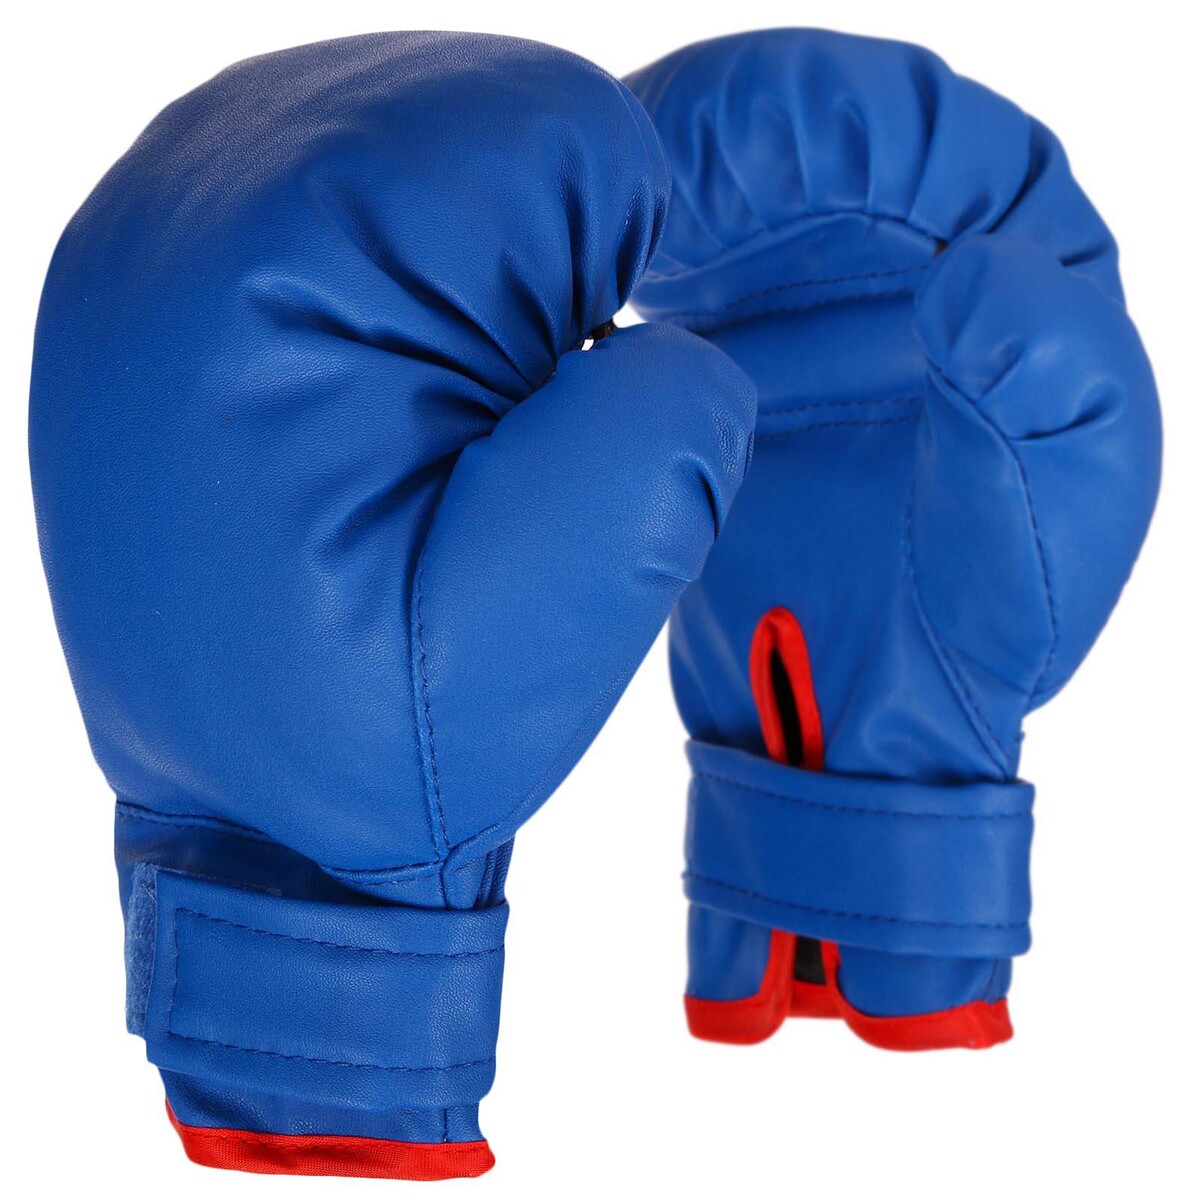 Перчатки боксерские детские, цвет синий перчатки боксерские everlast pro style elite 2208e 8oz к з синий